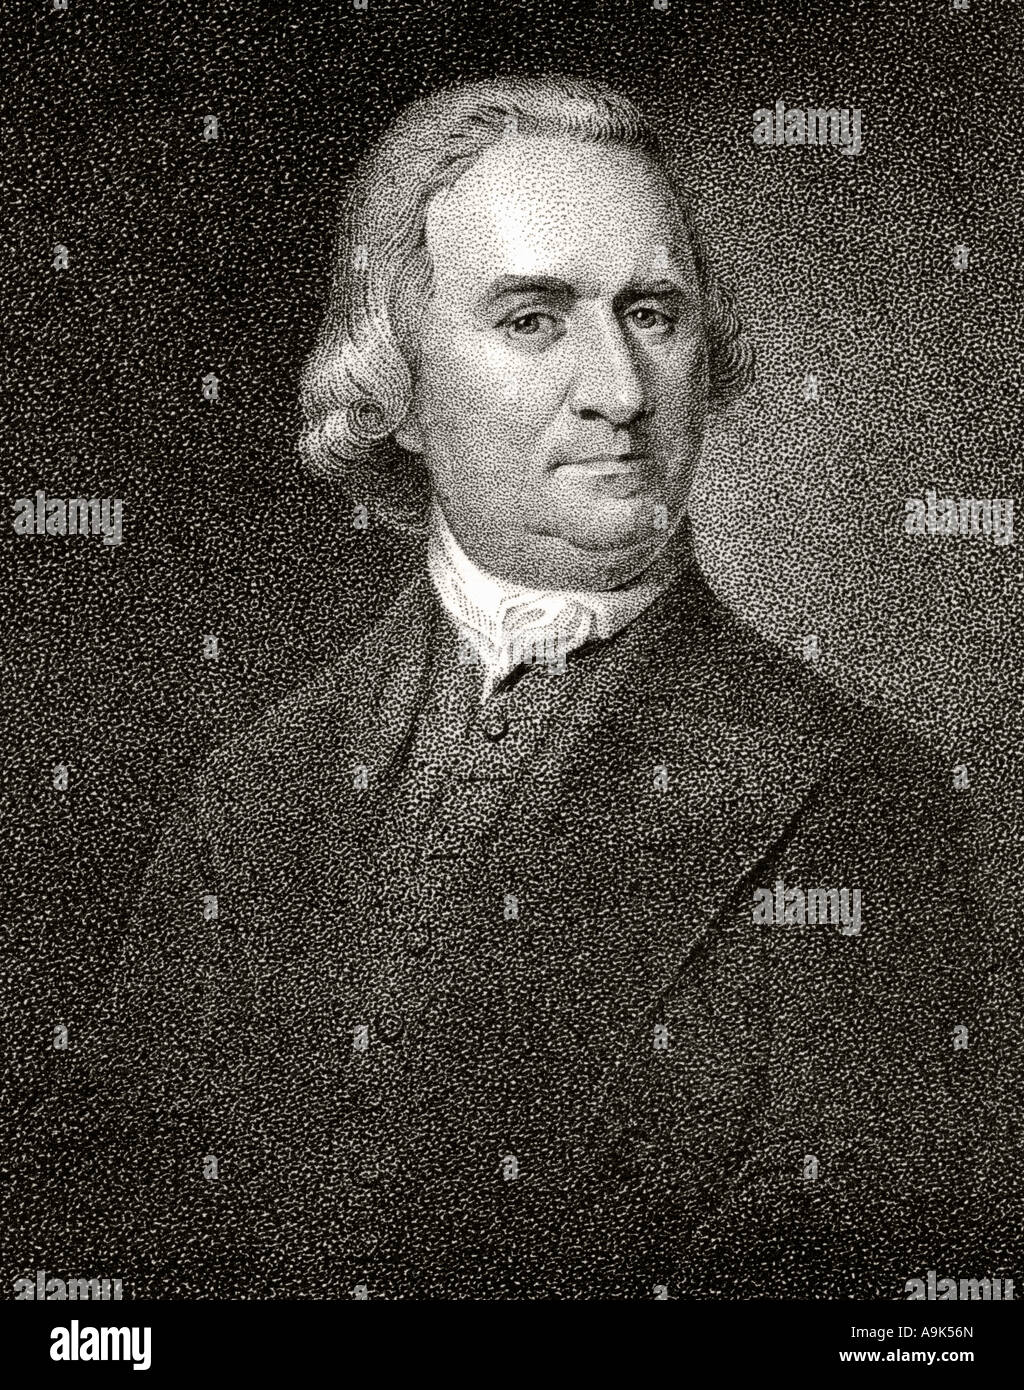 Samuel Adams, 1722 - 1803. American statesman and Founding Father. Stock Photo